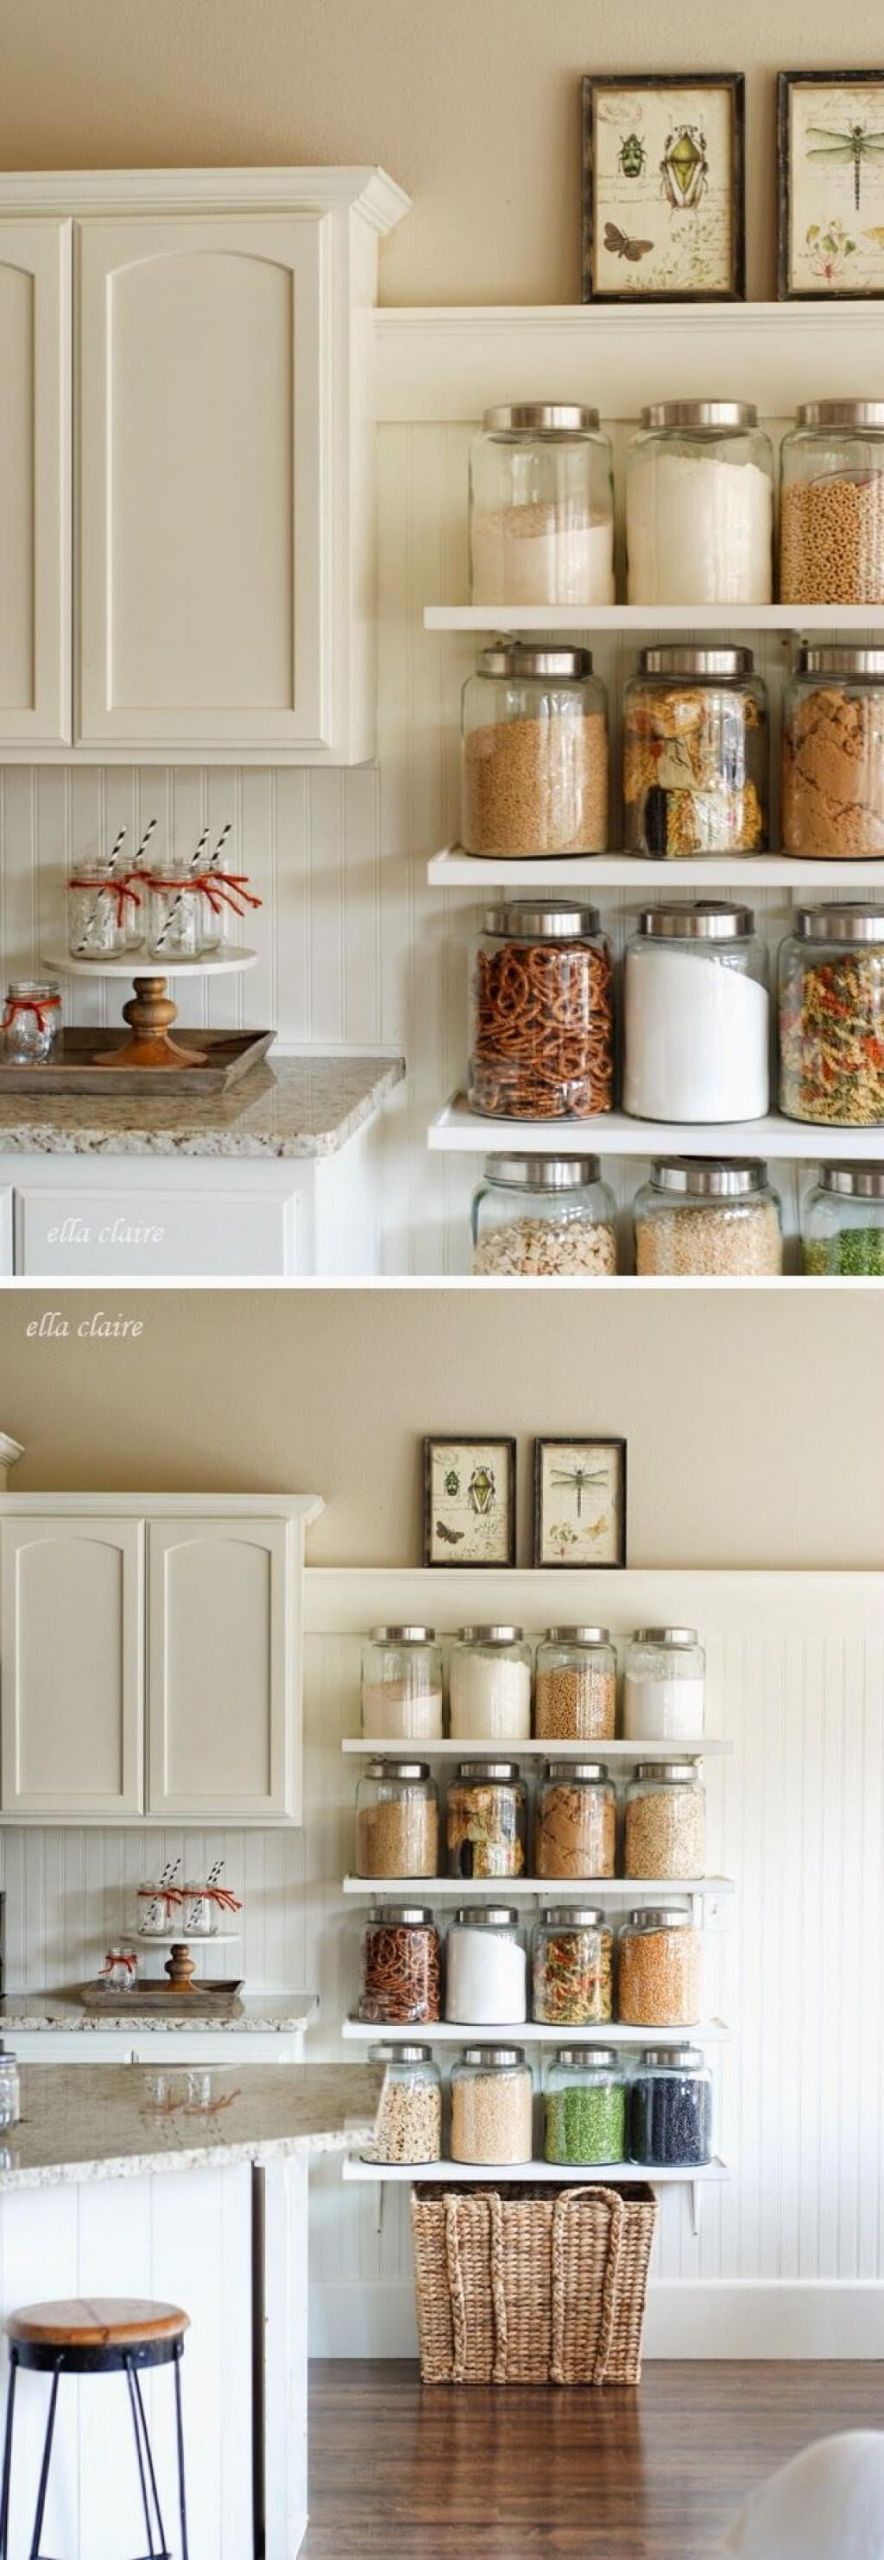 Small Kitchen Shelf Ideas Luxury 45 Best Small Kitchen Storage organization Ideas and